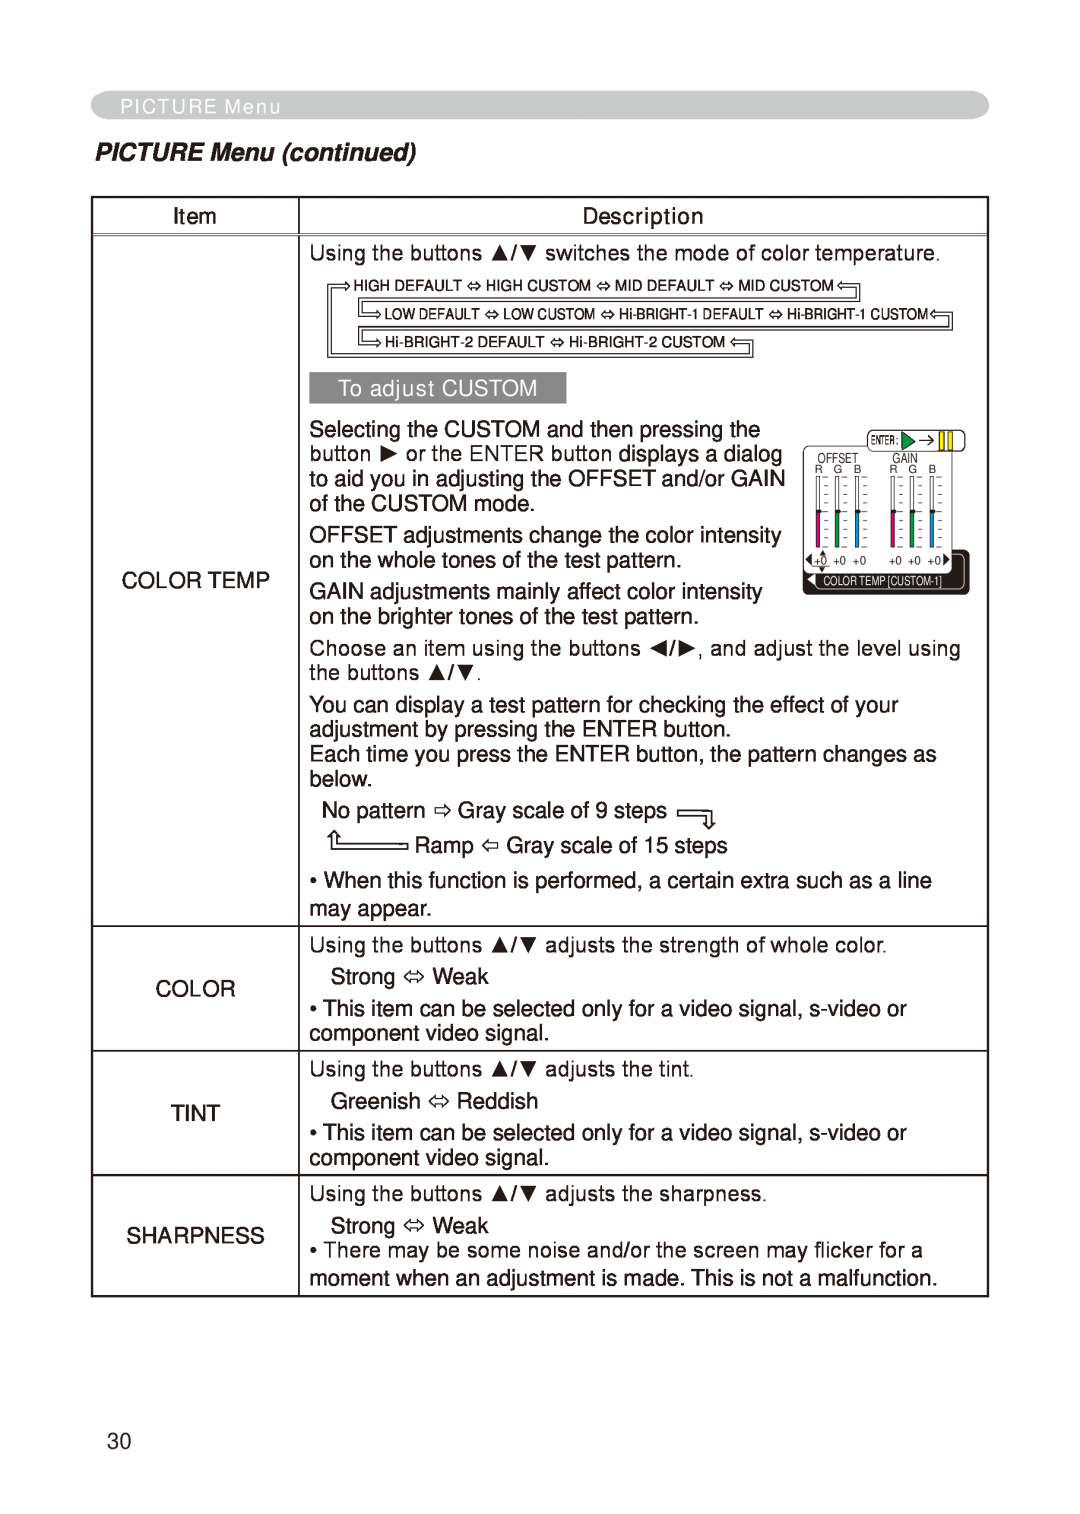 Hitachi CP-X268A user manual PICTURE Menu continued, Description, To adjust CUSTOM, Color Temp, Tint, Sharpness 